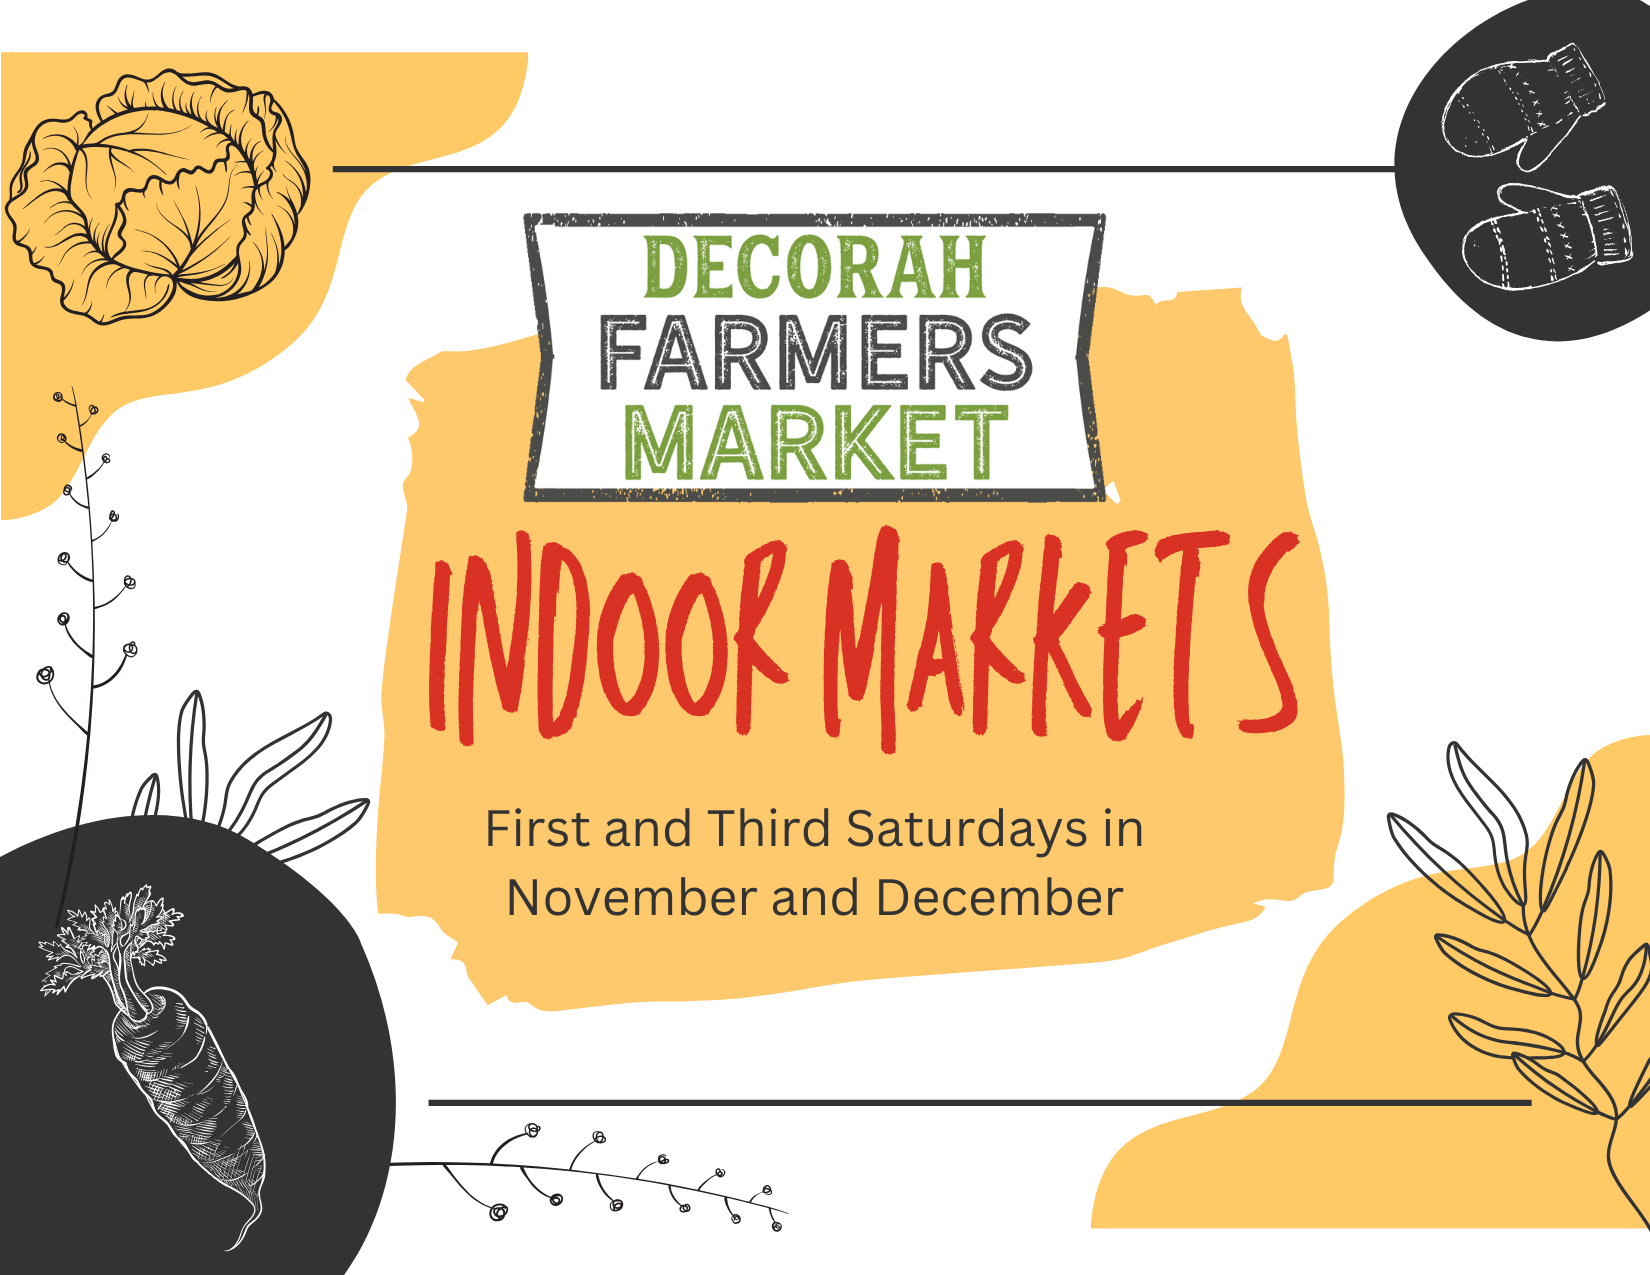 Decorah Farmers Market: Indoor Market - Winter Wellness thumbnail